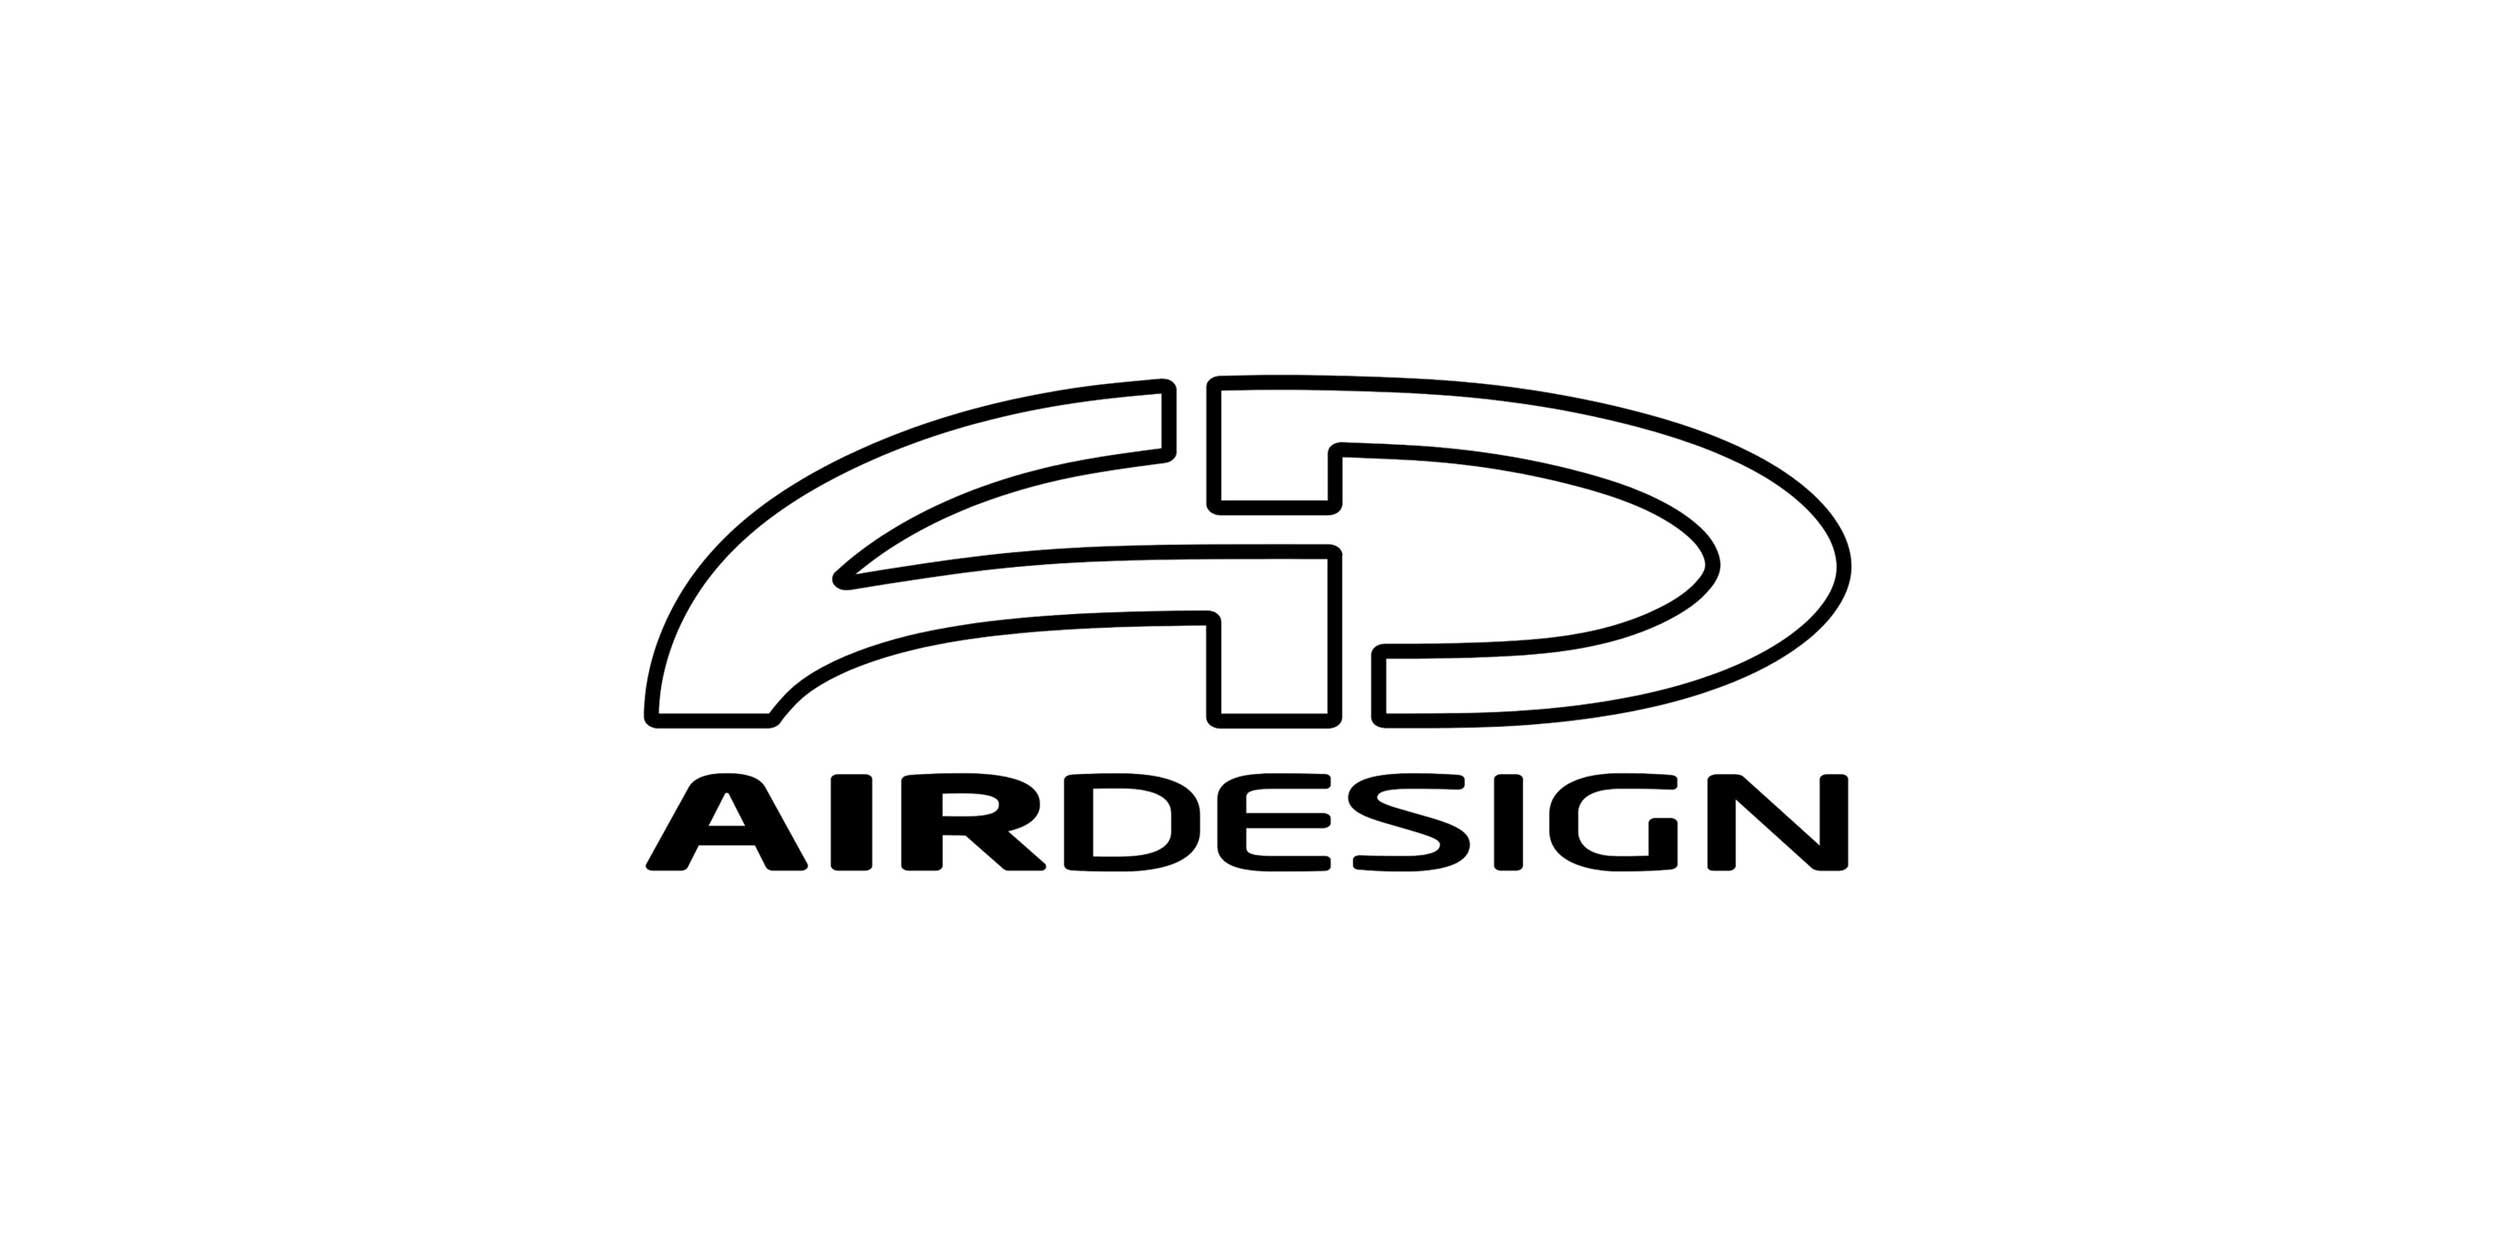 AirDesign logo